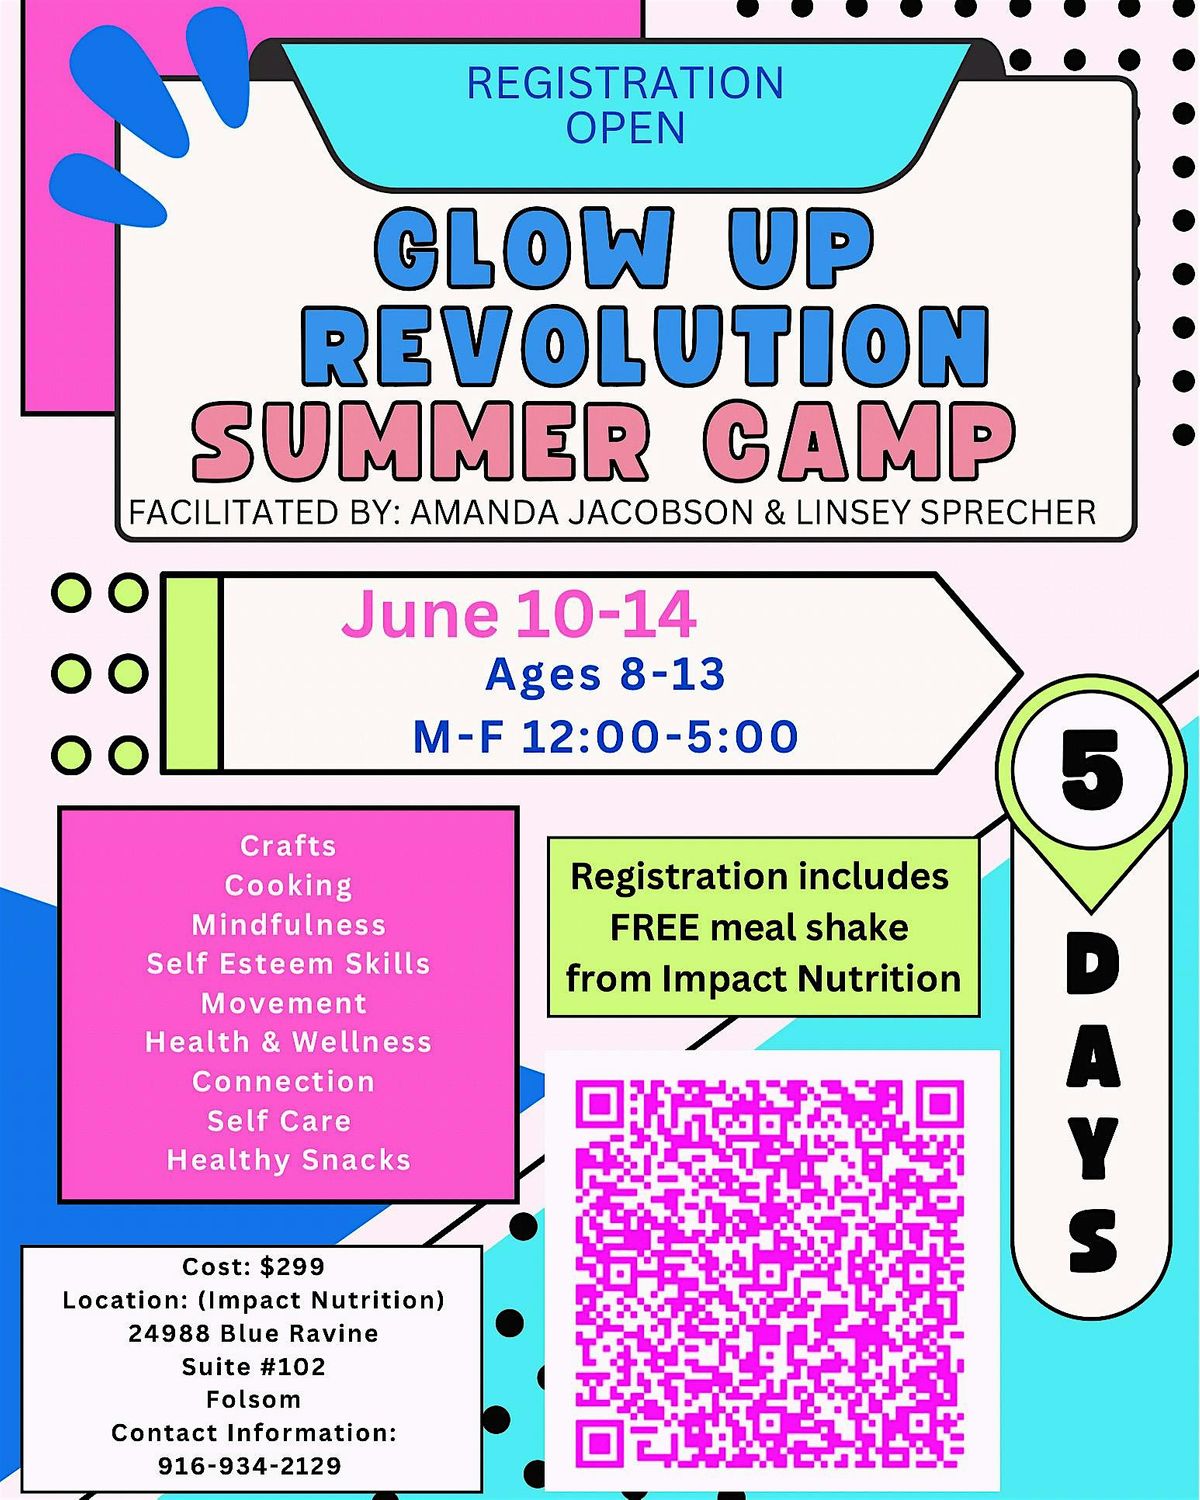 Glow up Revolution Summer Camp